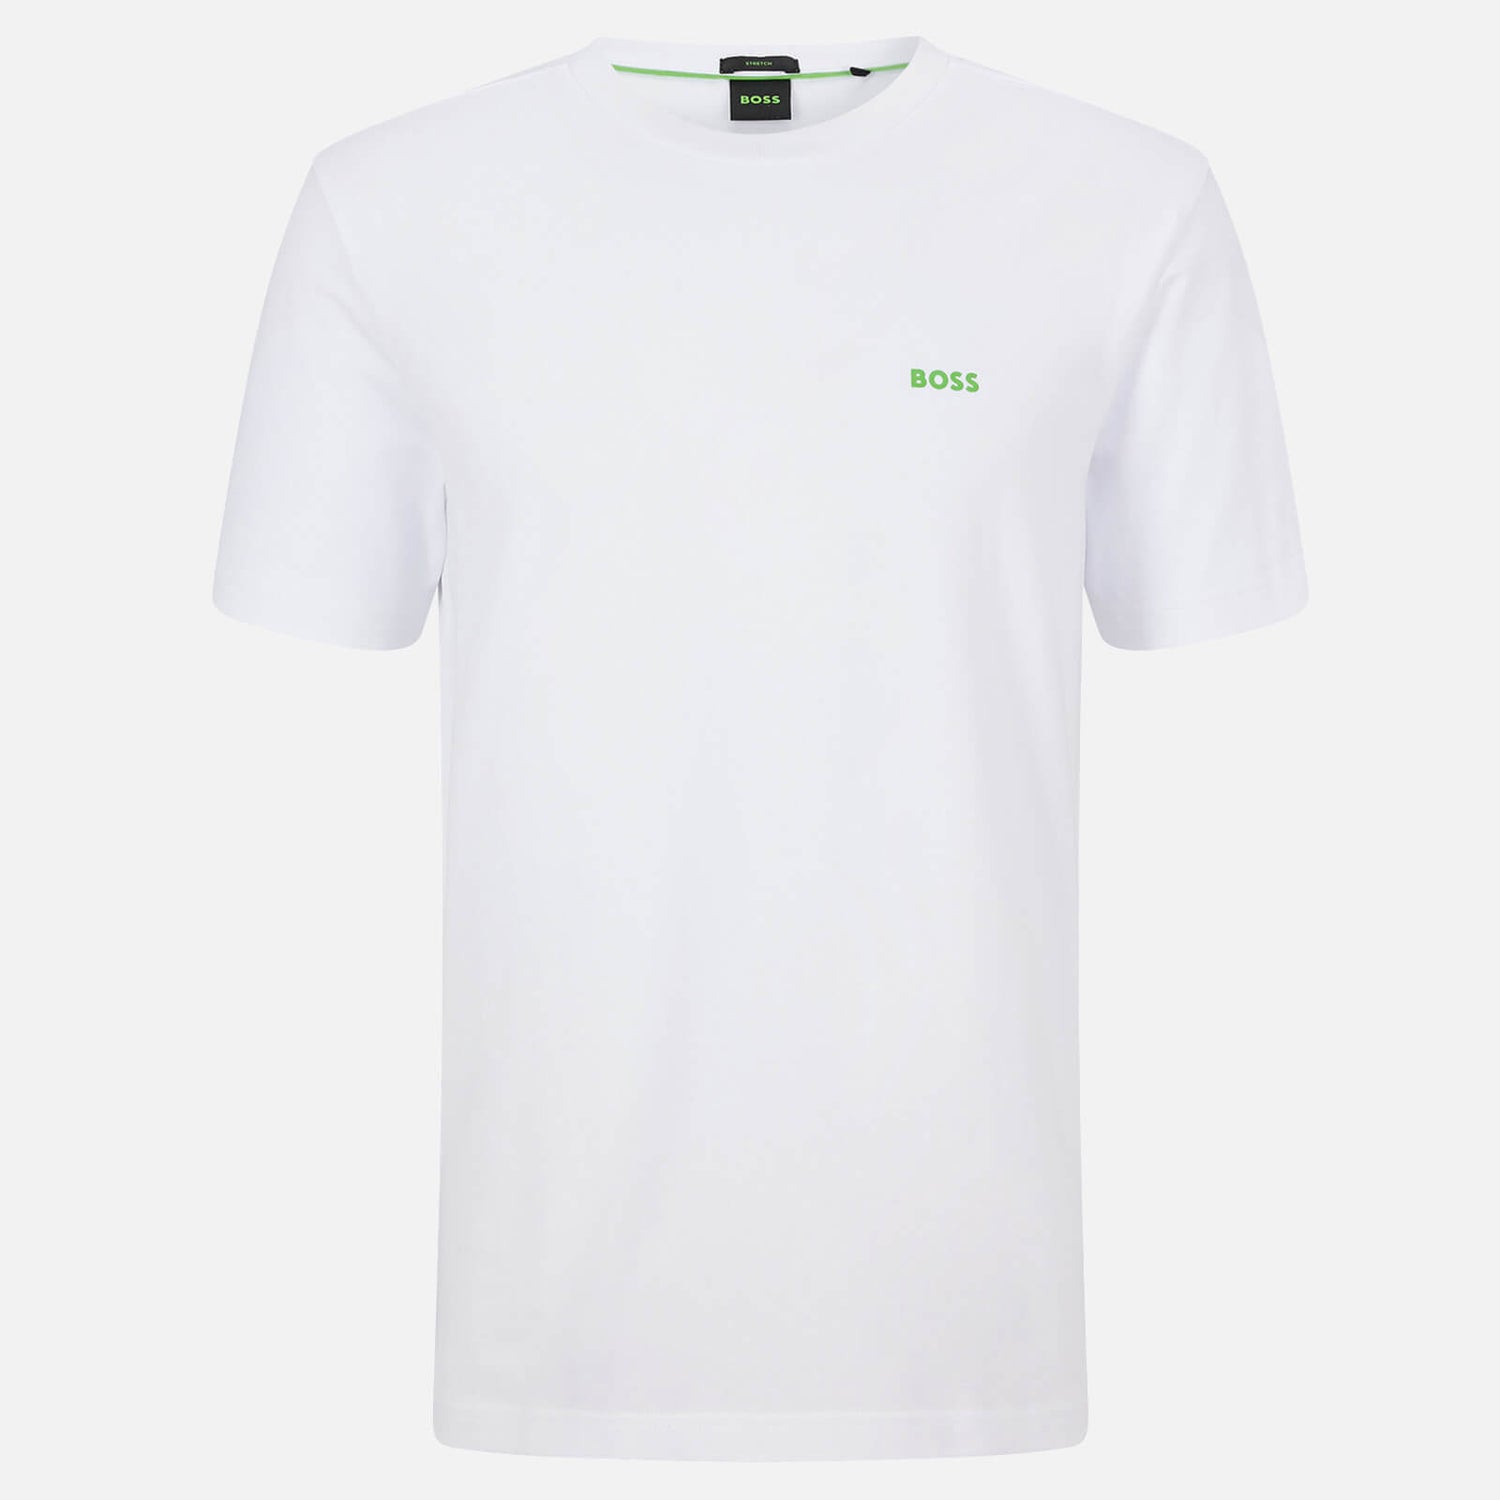 BOSS Athleisure Men's Small Logo T-Shirt - White - S